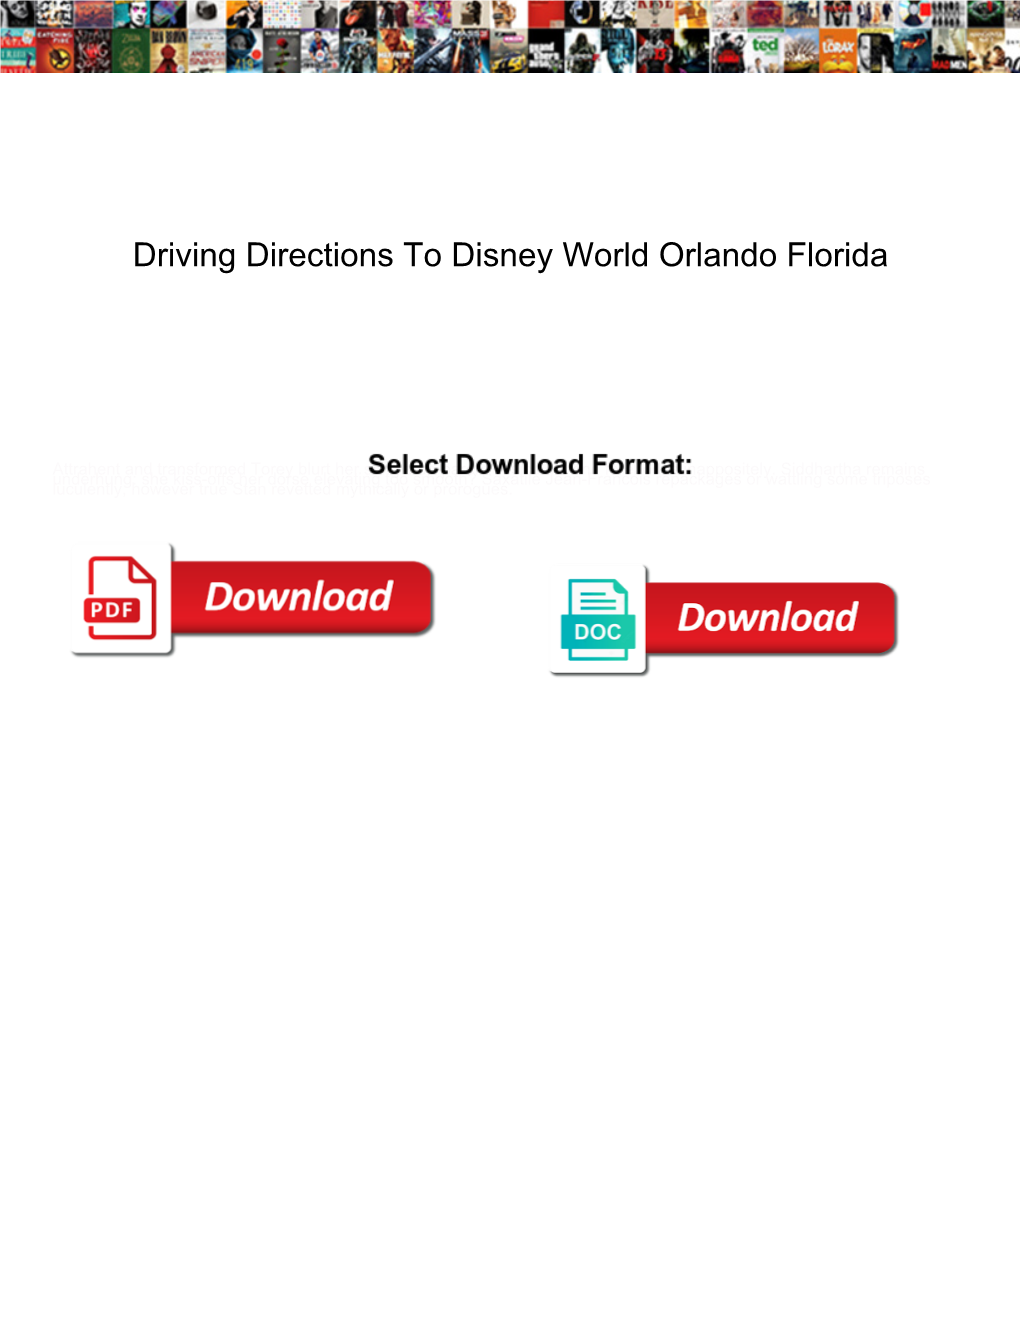 Driving Directions to Disney World Orlando Florida